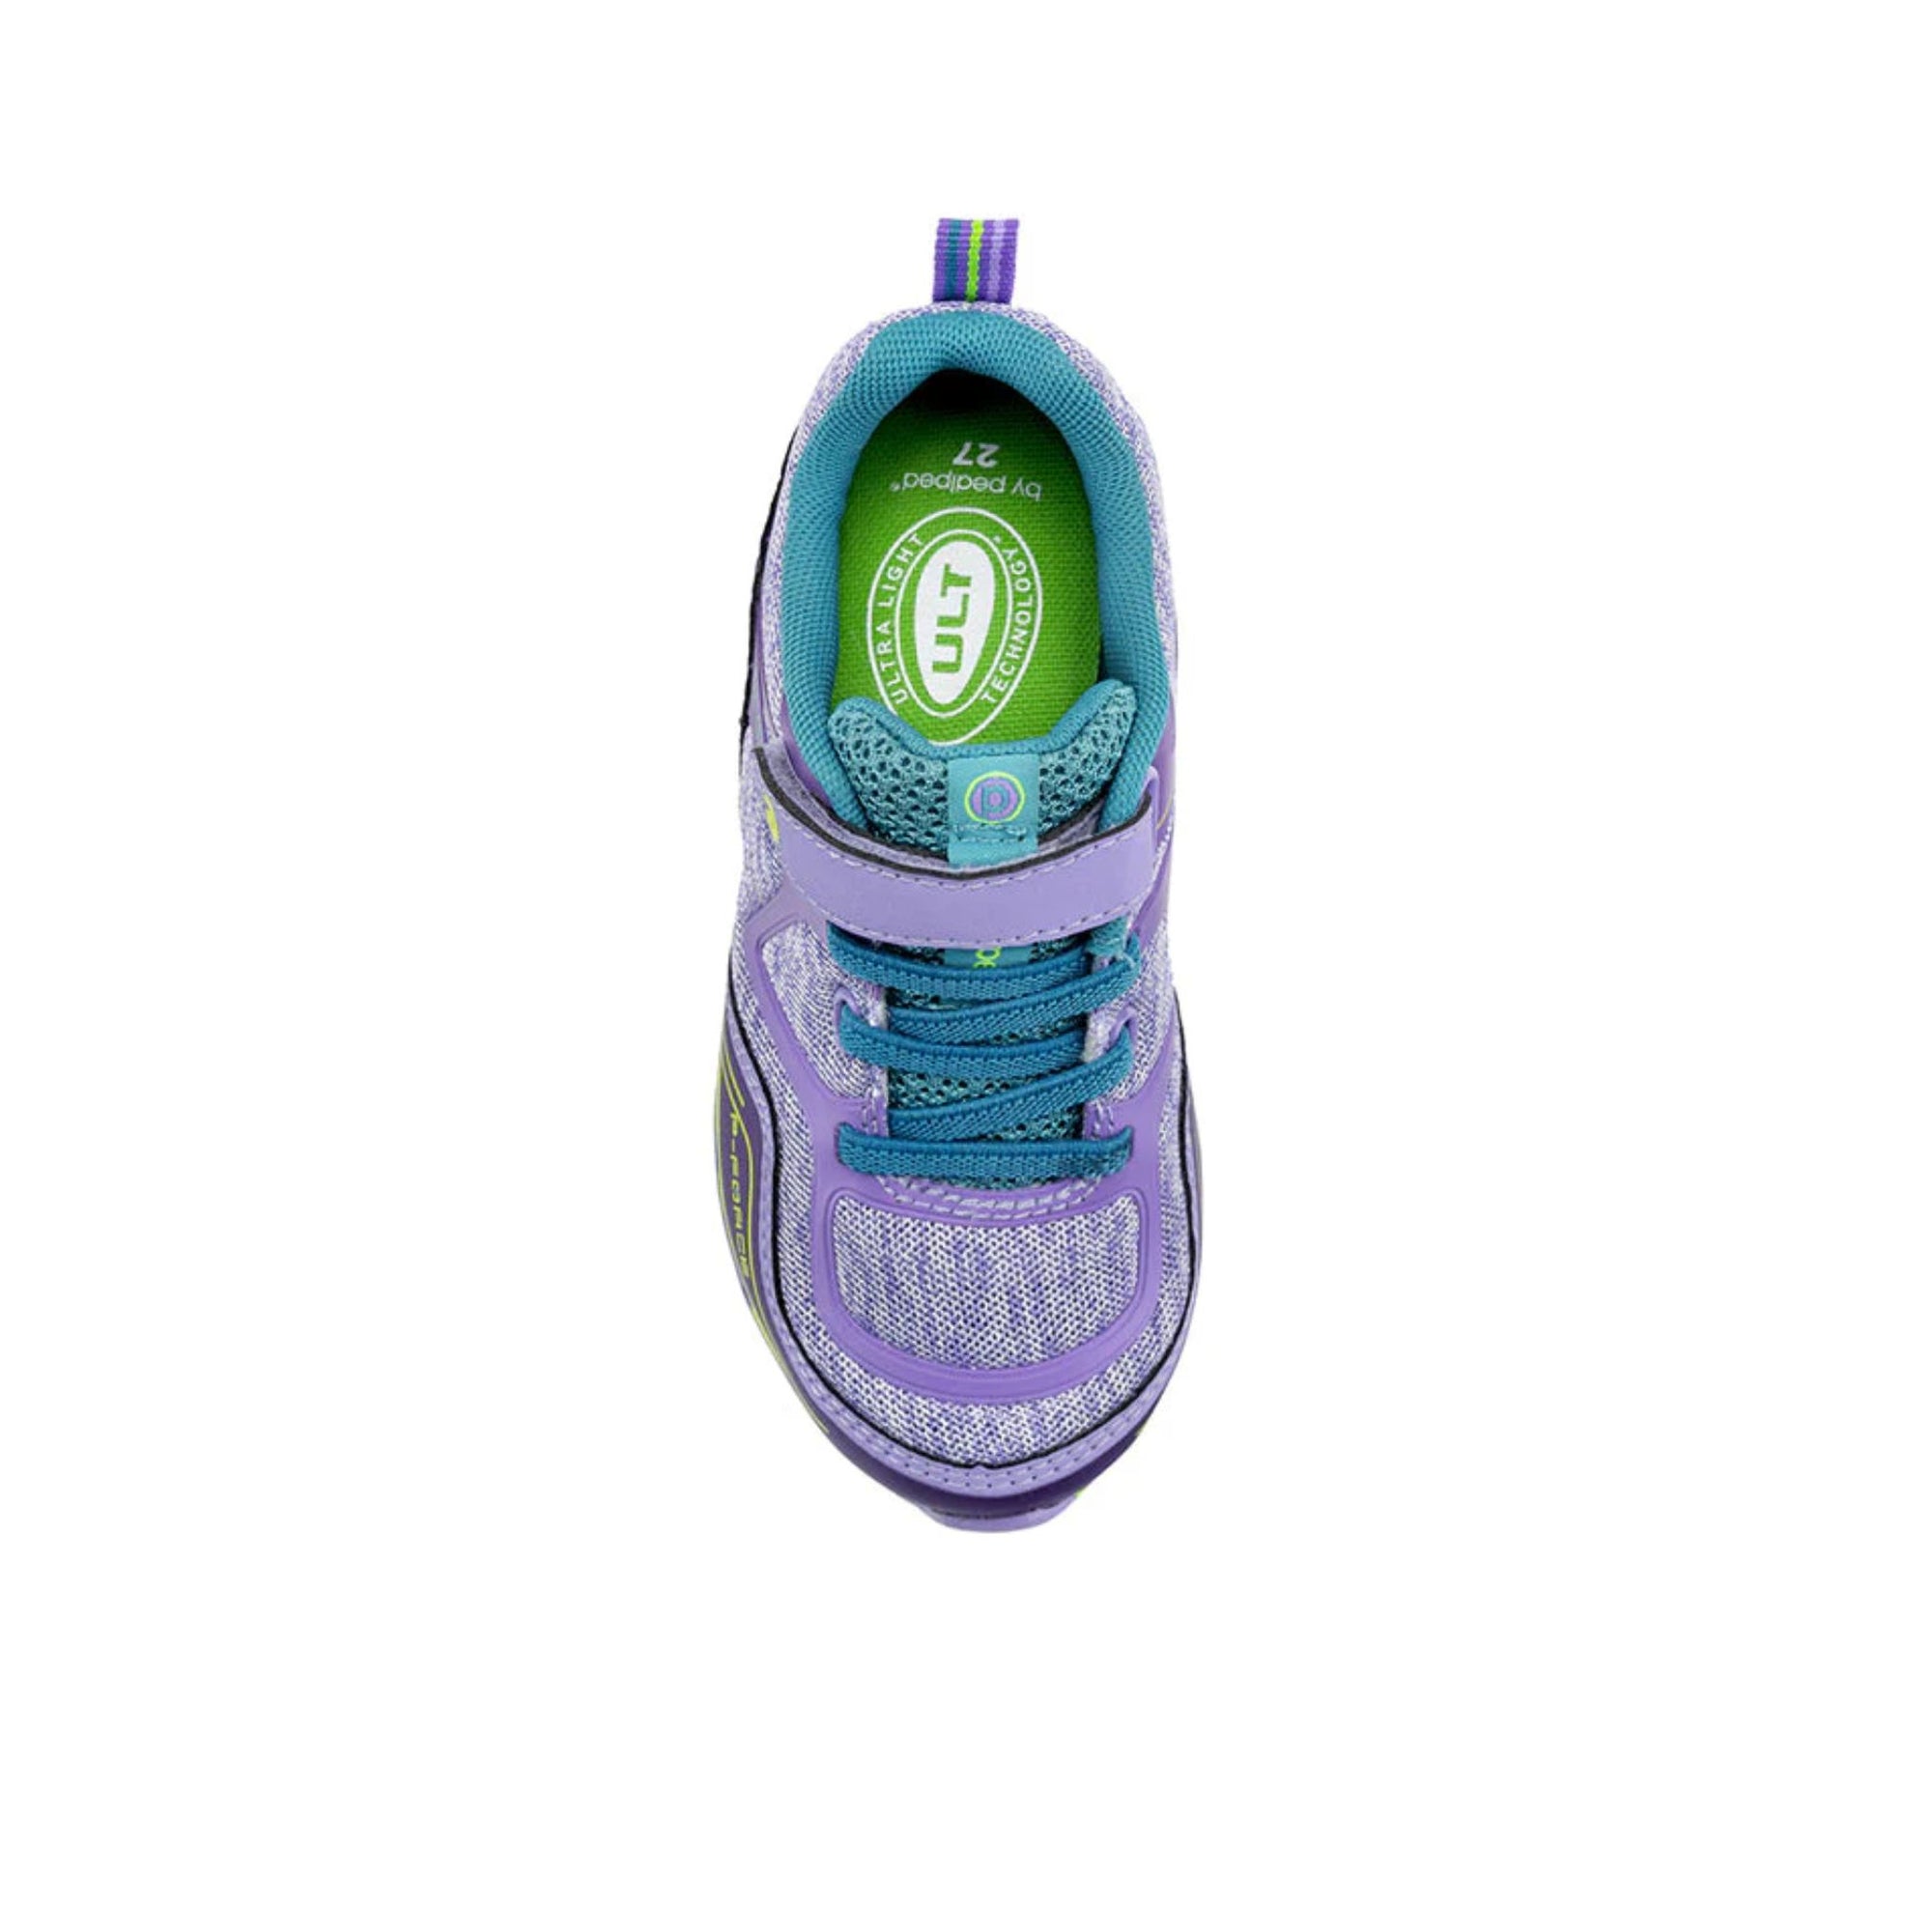 Pediped Flex Force Lavender Athletic Shoes